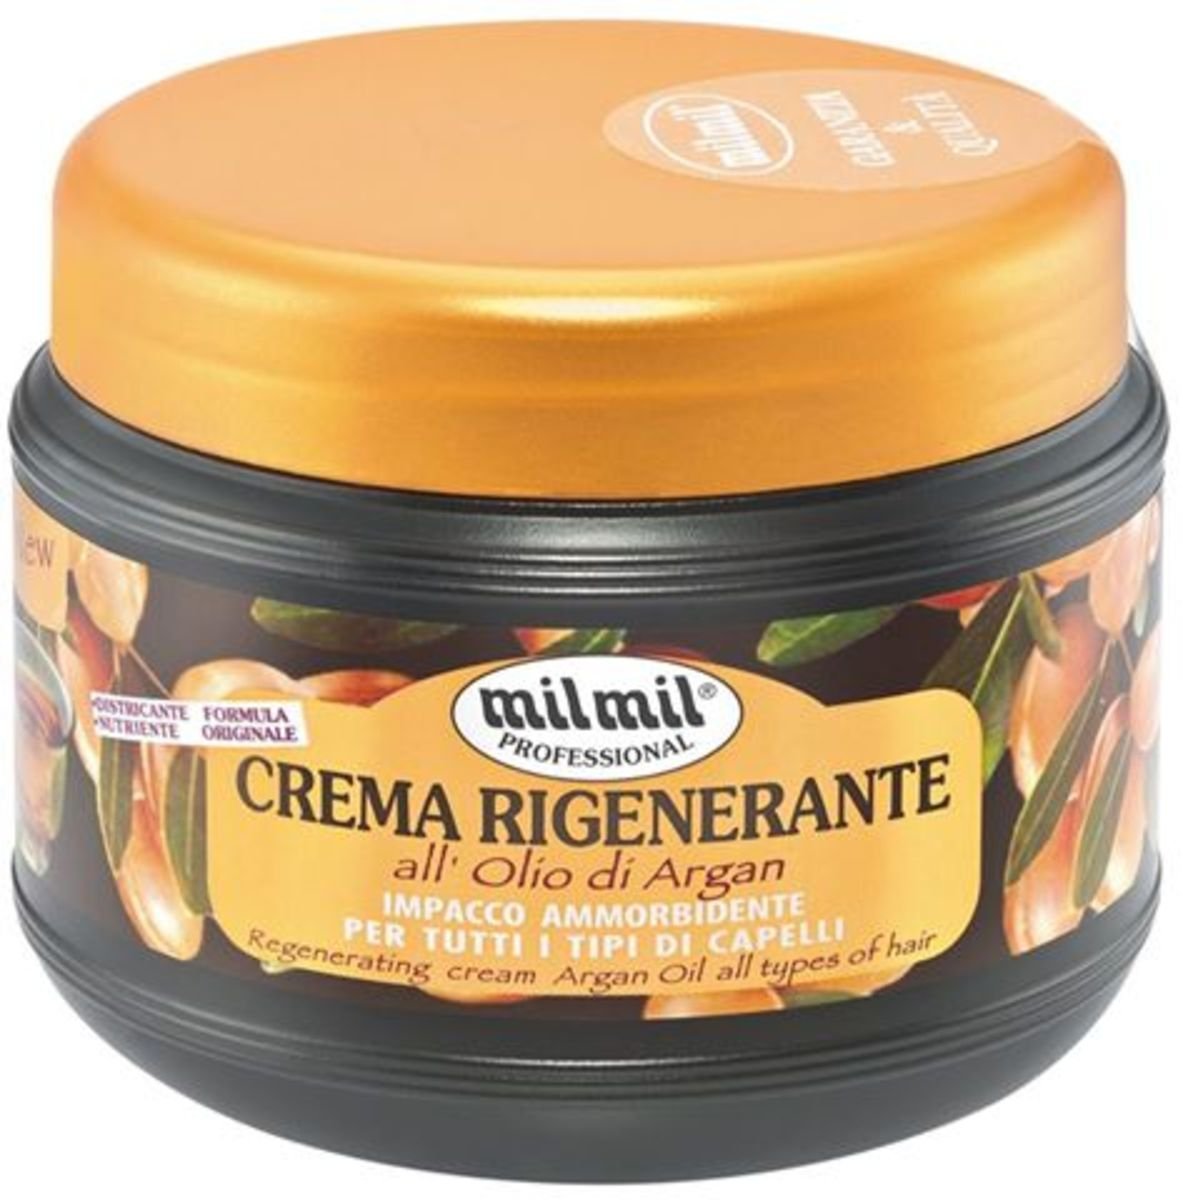 Hair Regenerating cream Argan Oil